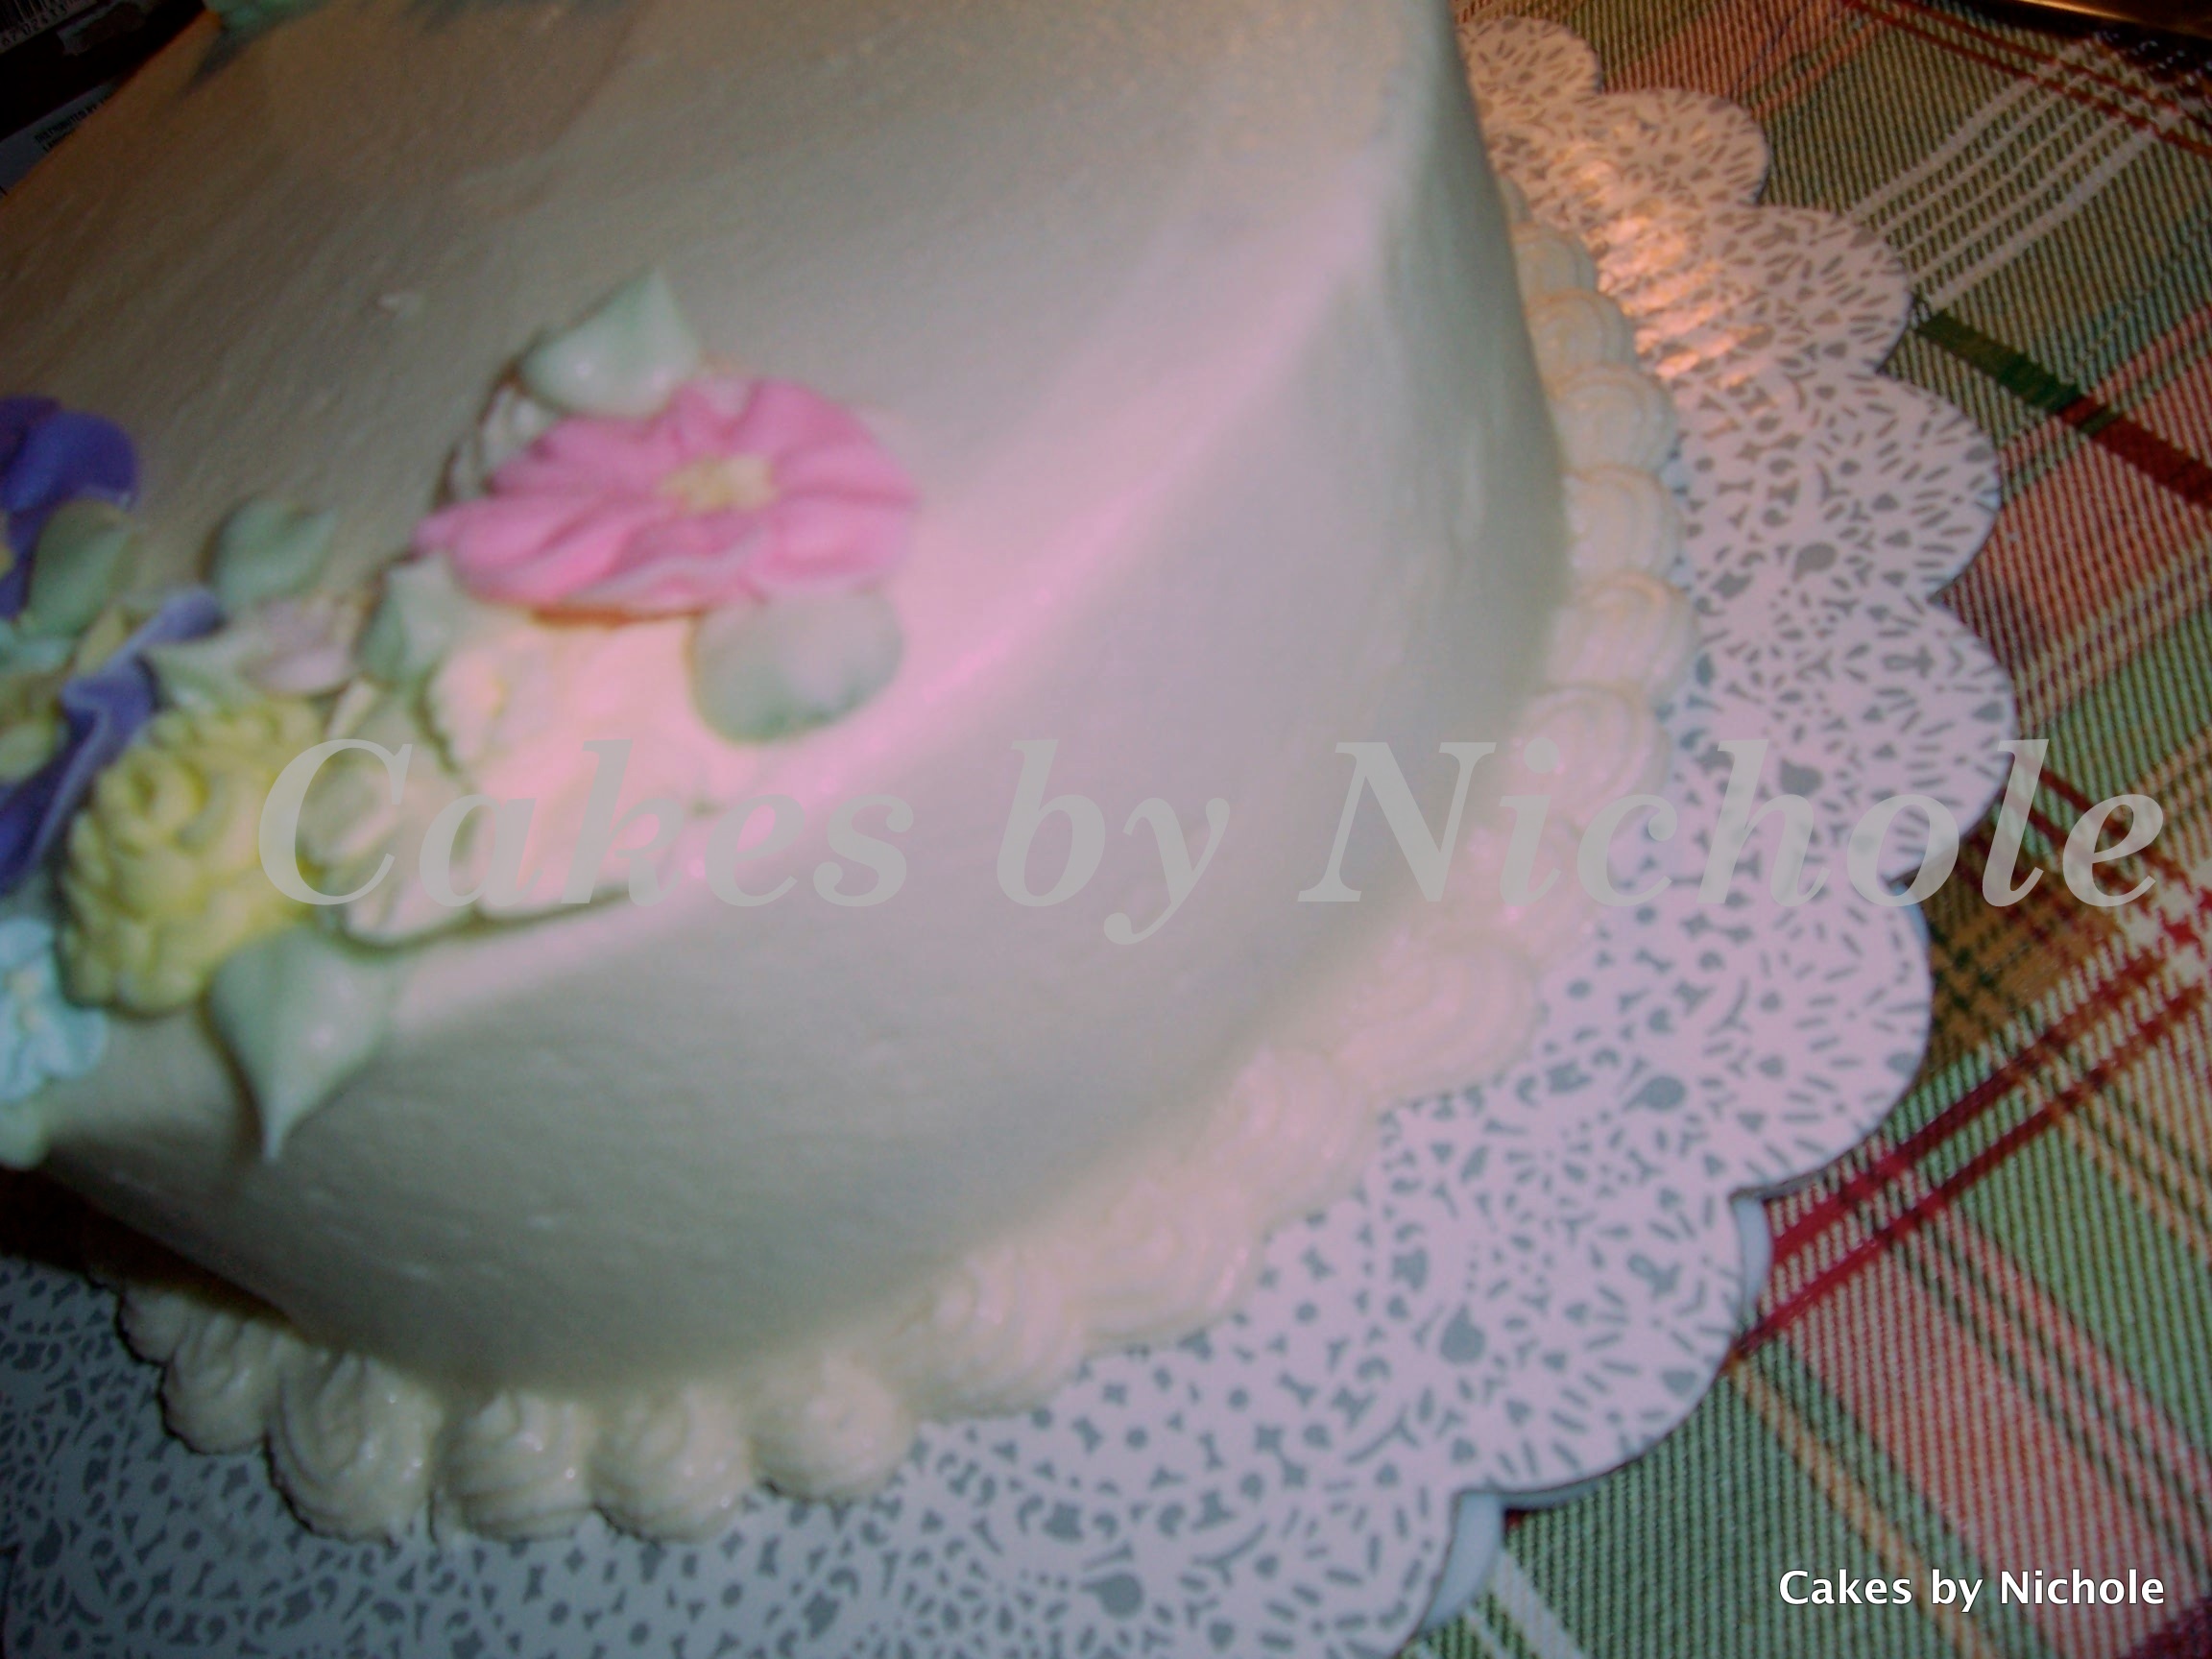 1st cake Cakes by Nichole